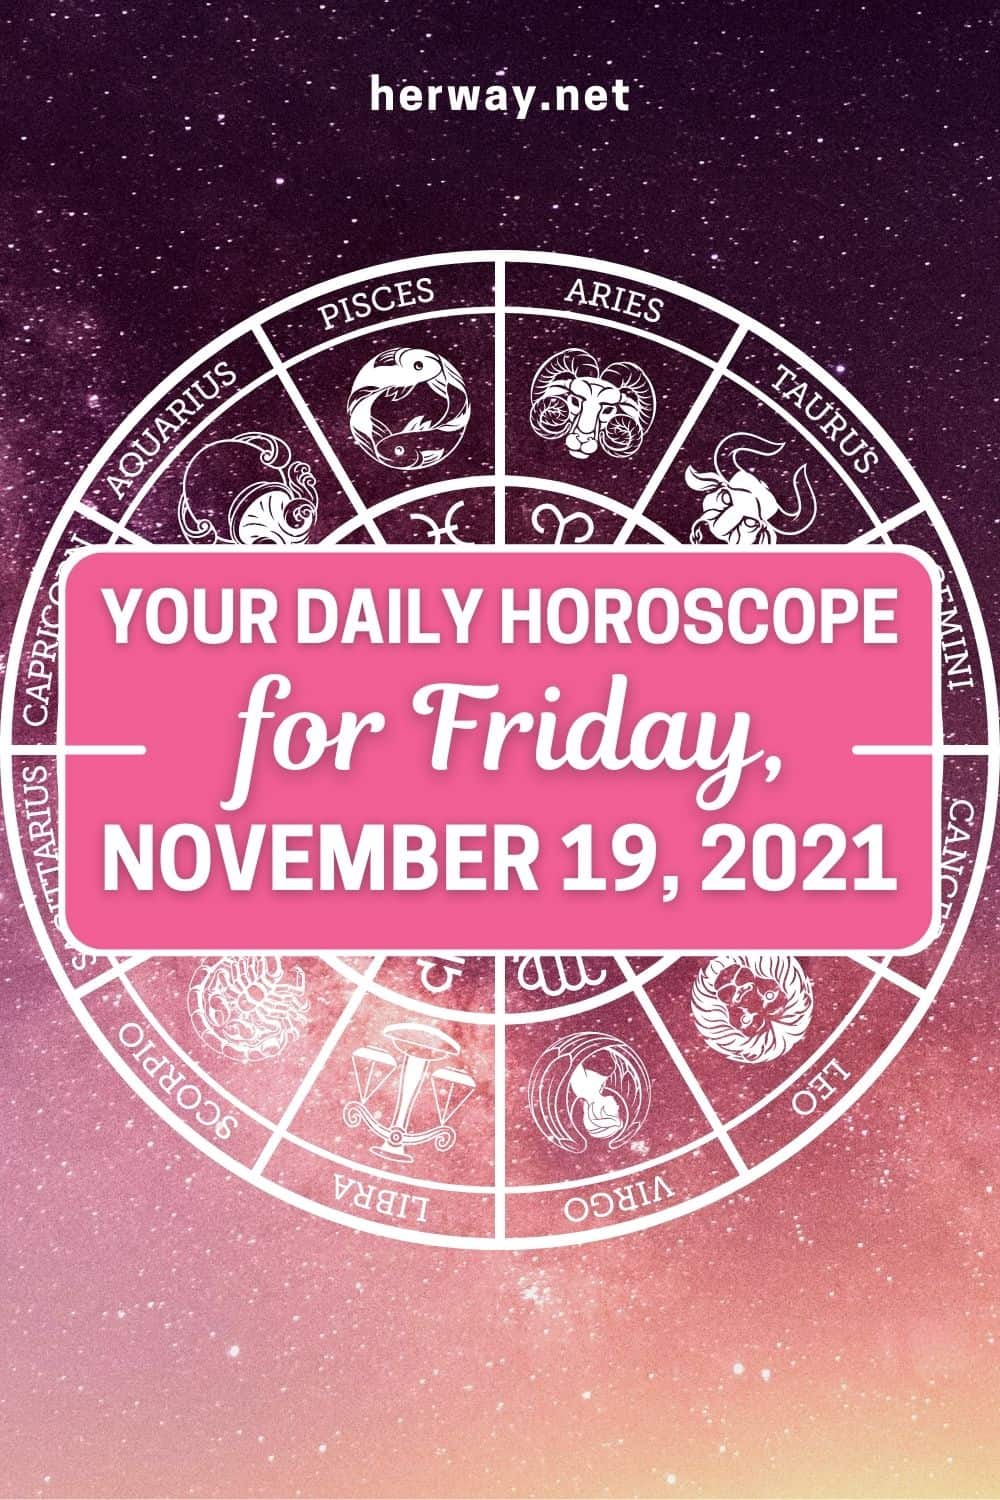 Daily Horoscope For Friday, November 19, 2021